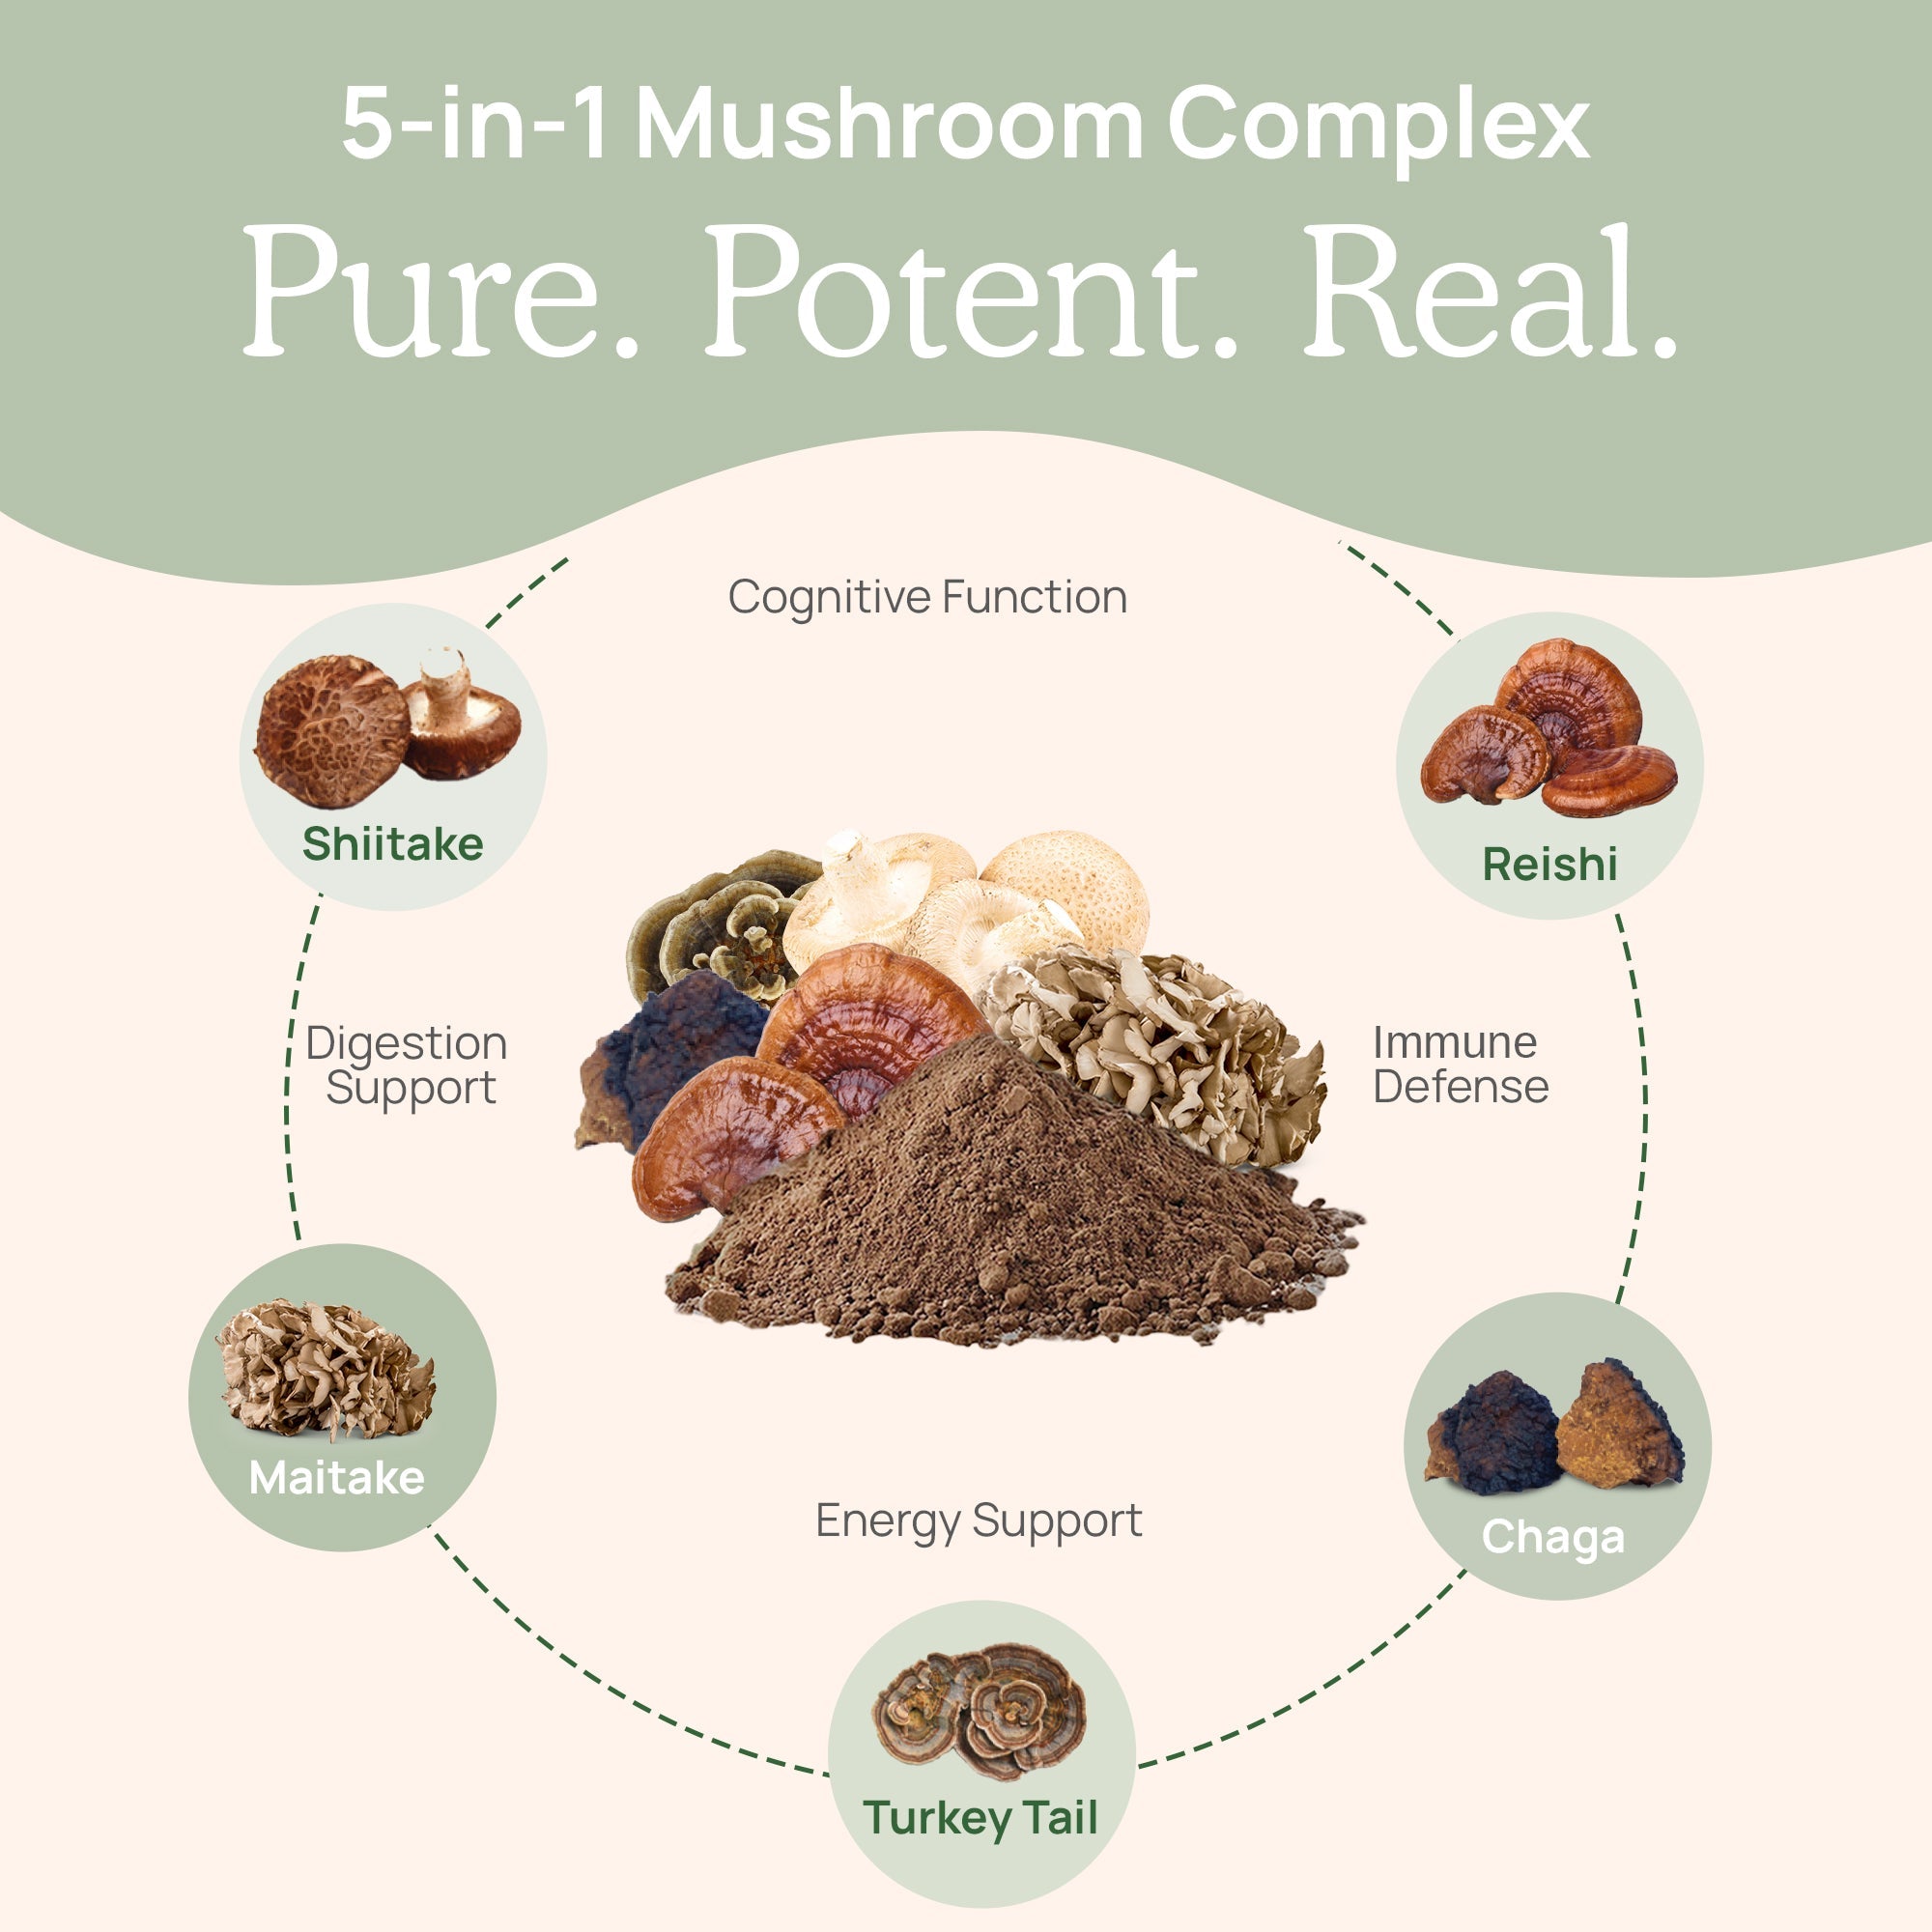 5 Defenders Organic Mushroom Complex – Bulk Powder